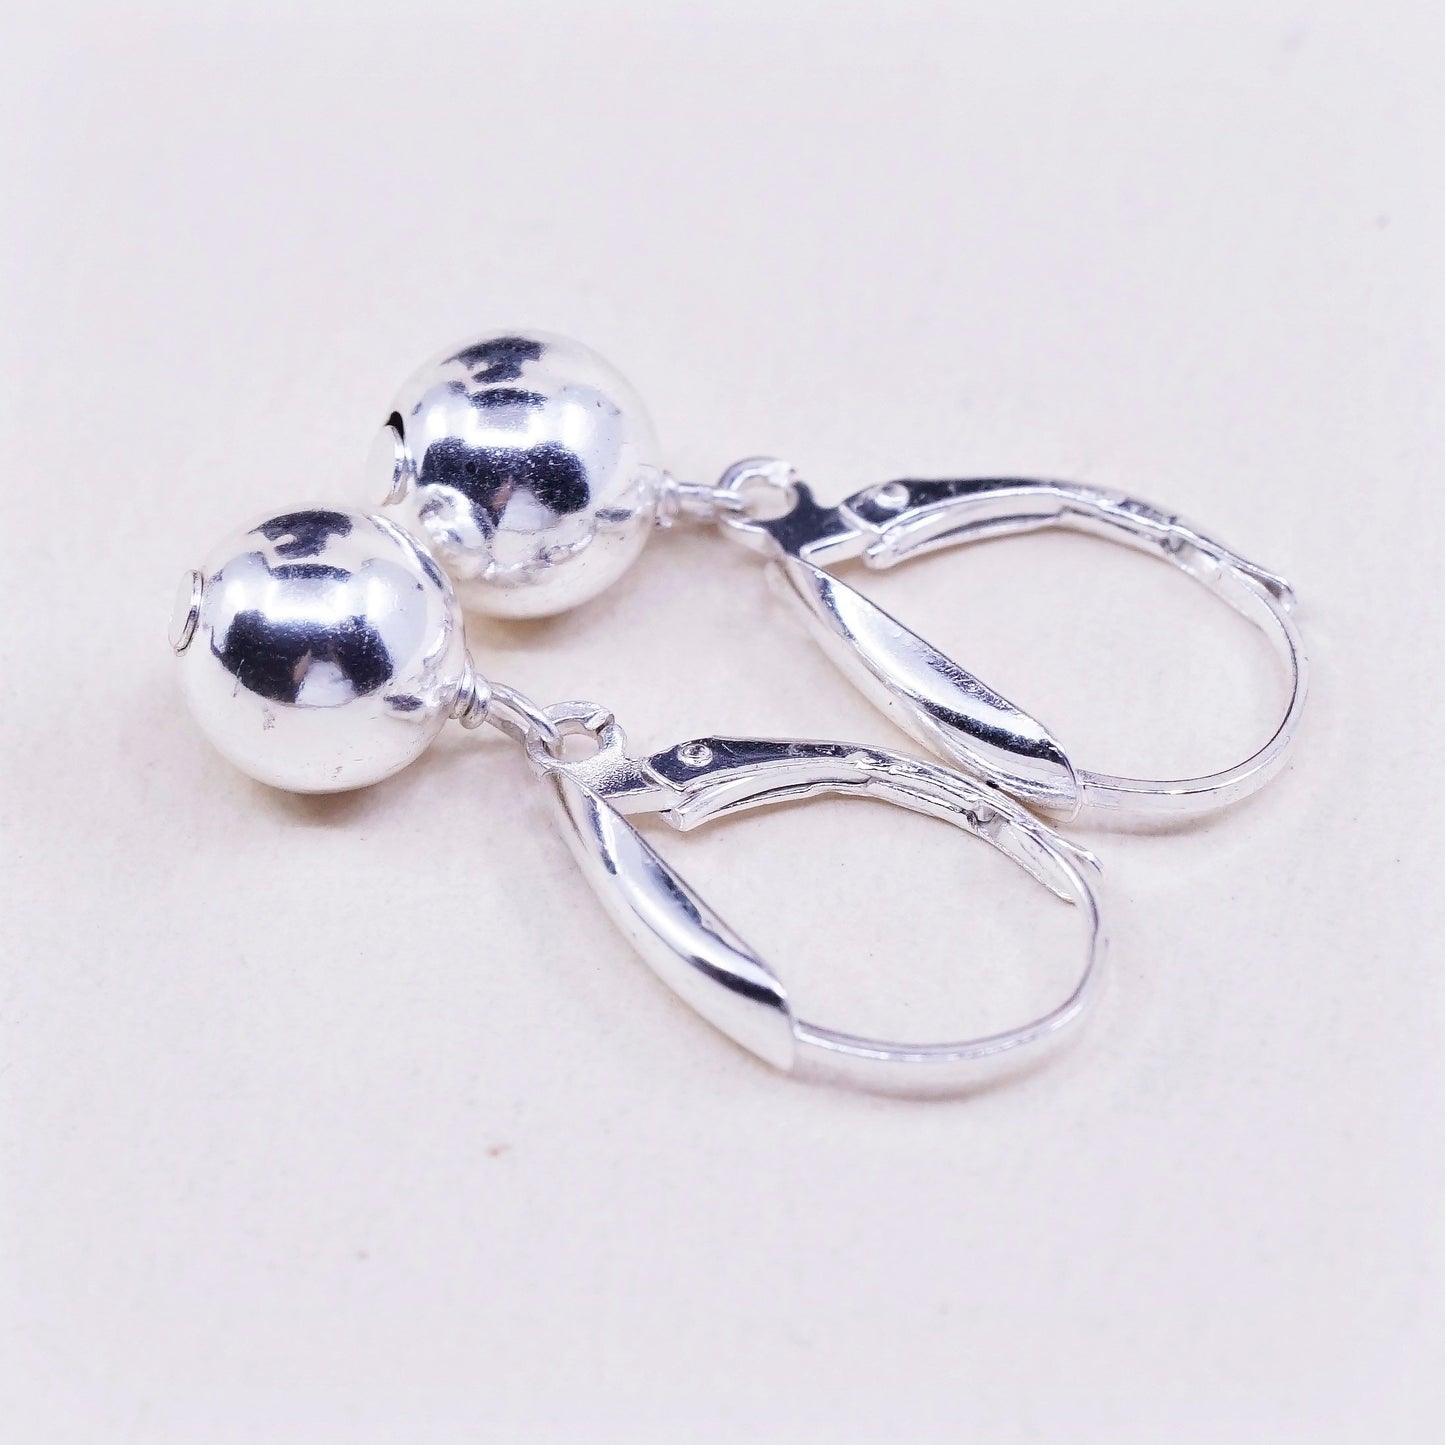 Vintage FAS sterling silver handmade earrings, 925 silver beads dangles